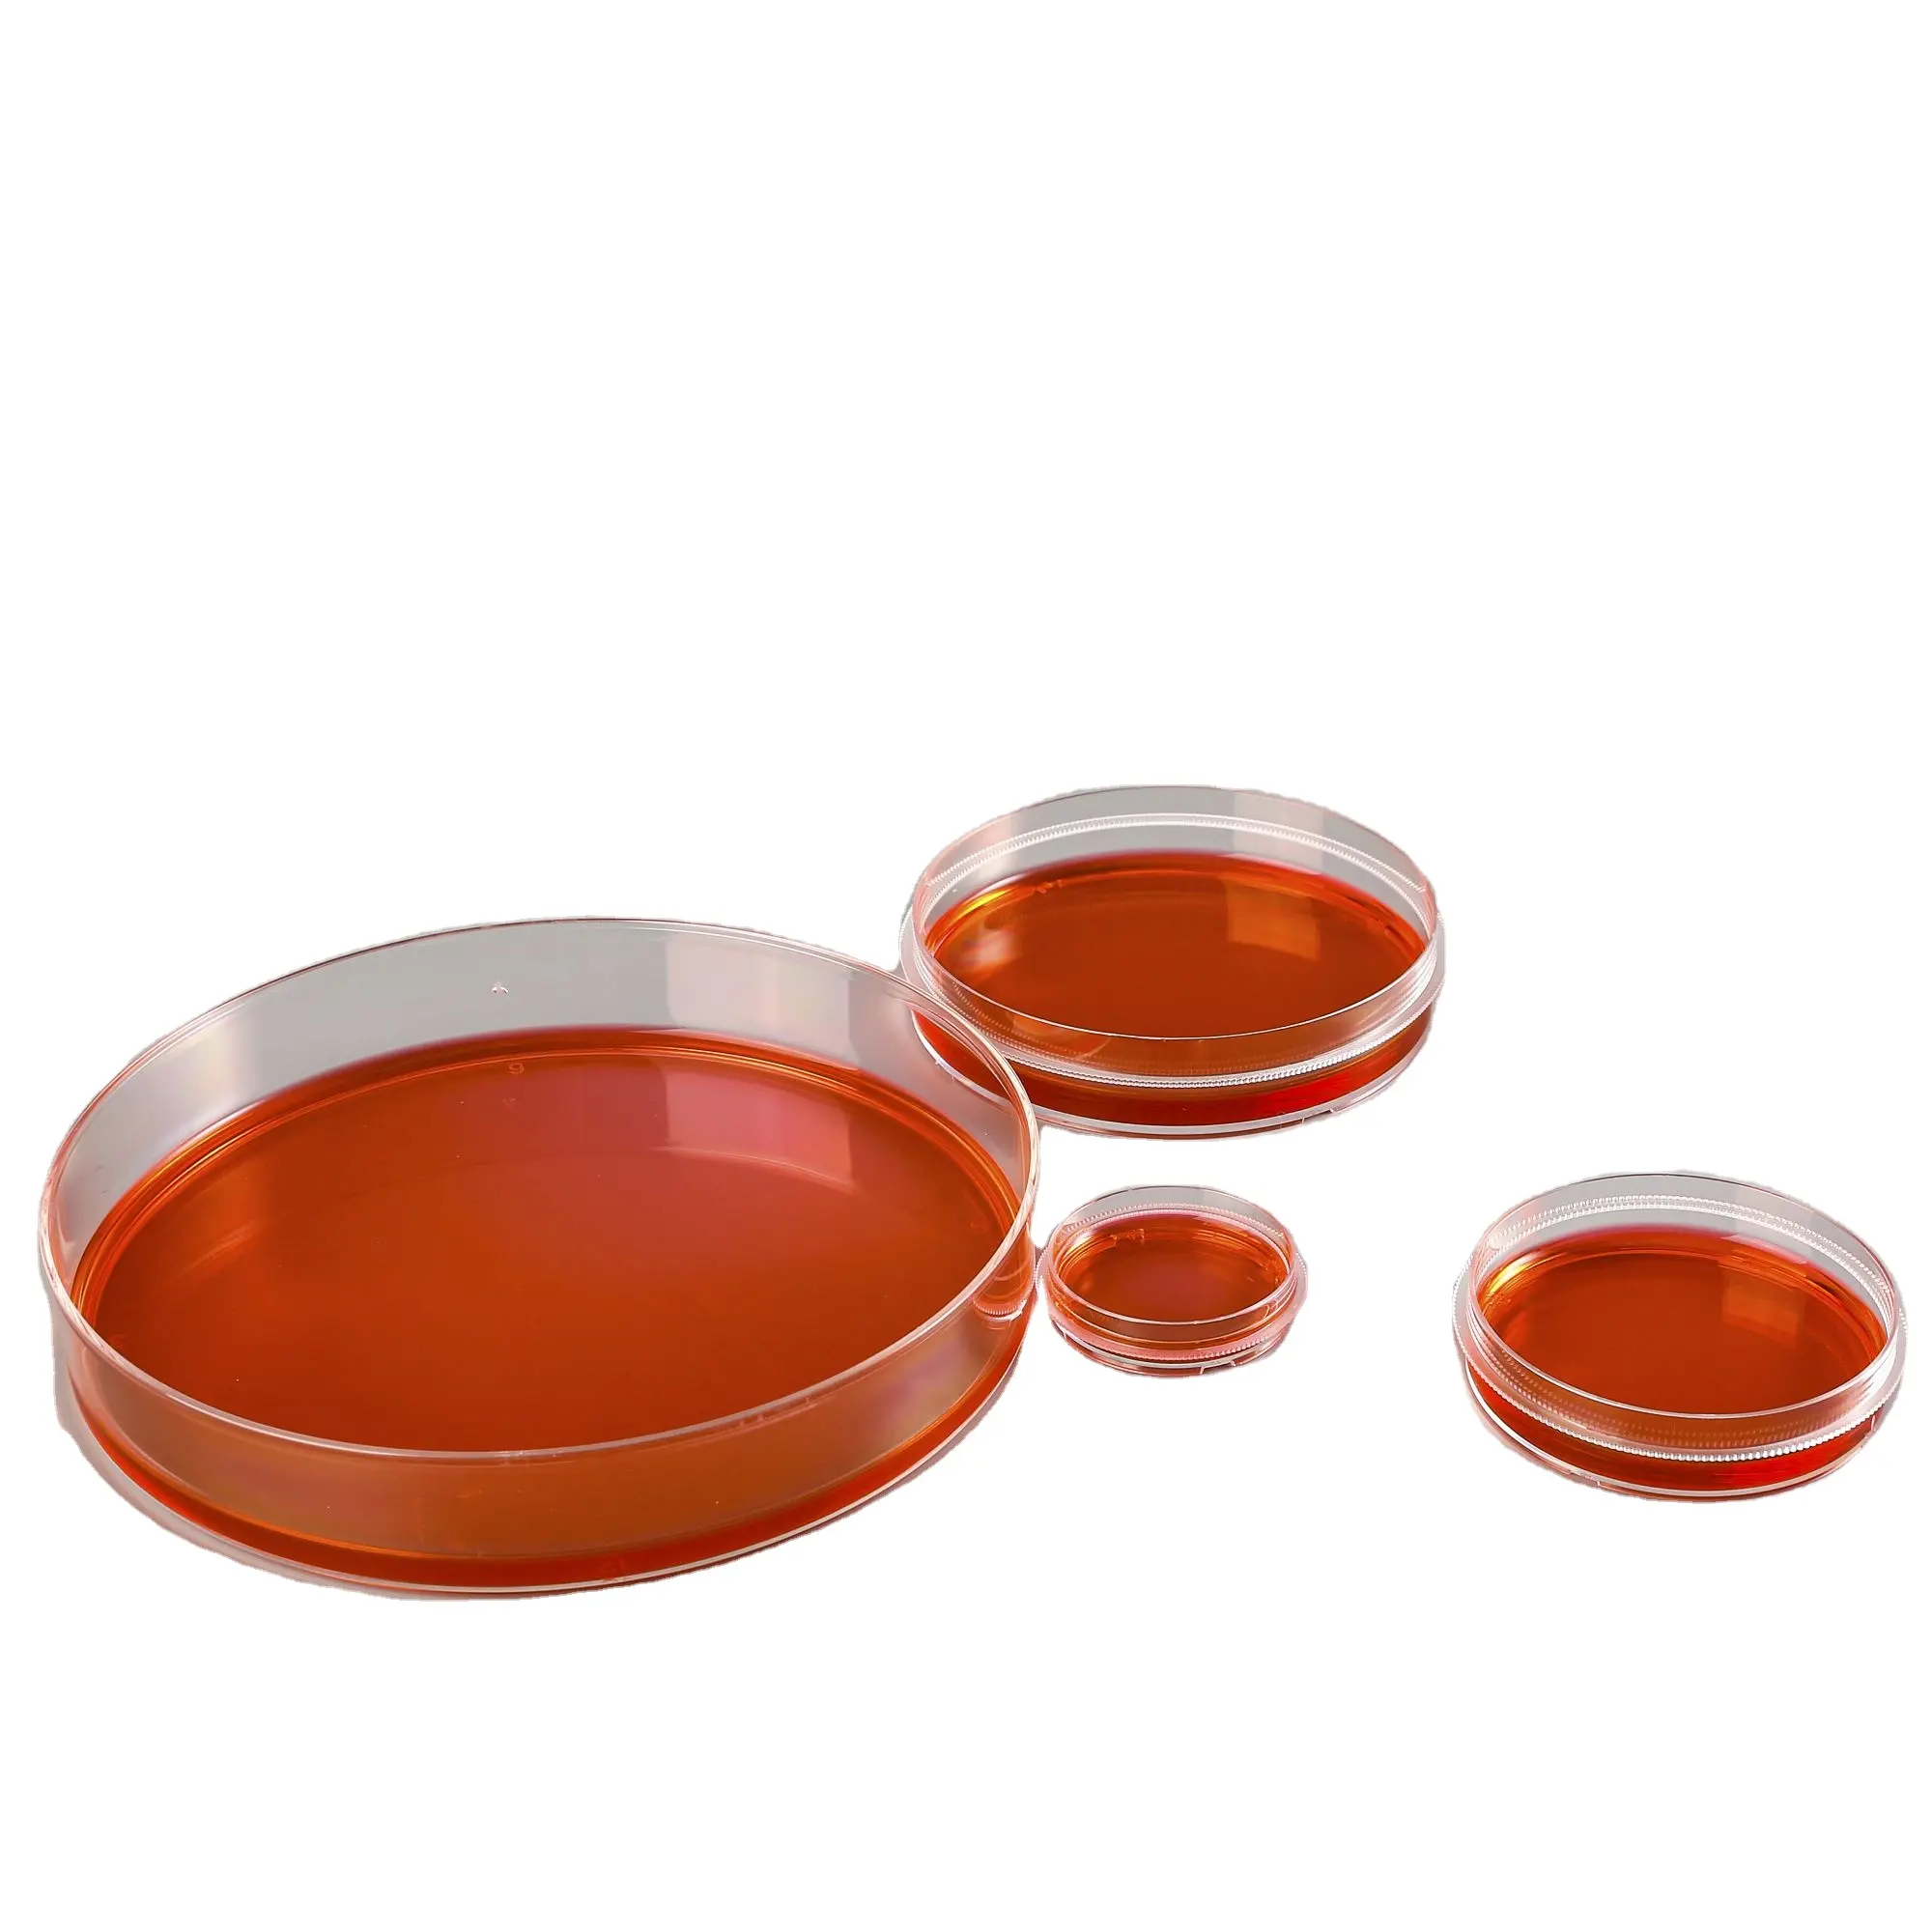 Sorfa Laboratory Plastic Petri Dish 60mmx15mm Wholesale Disposable Small Petri Dish 60mm